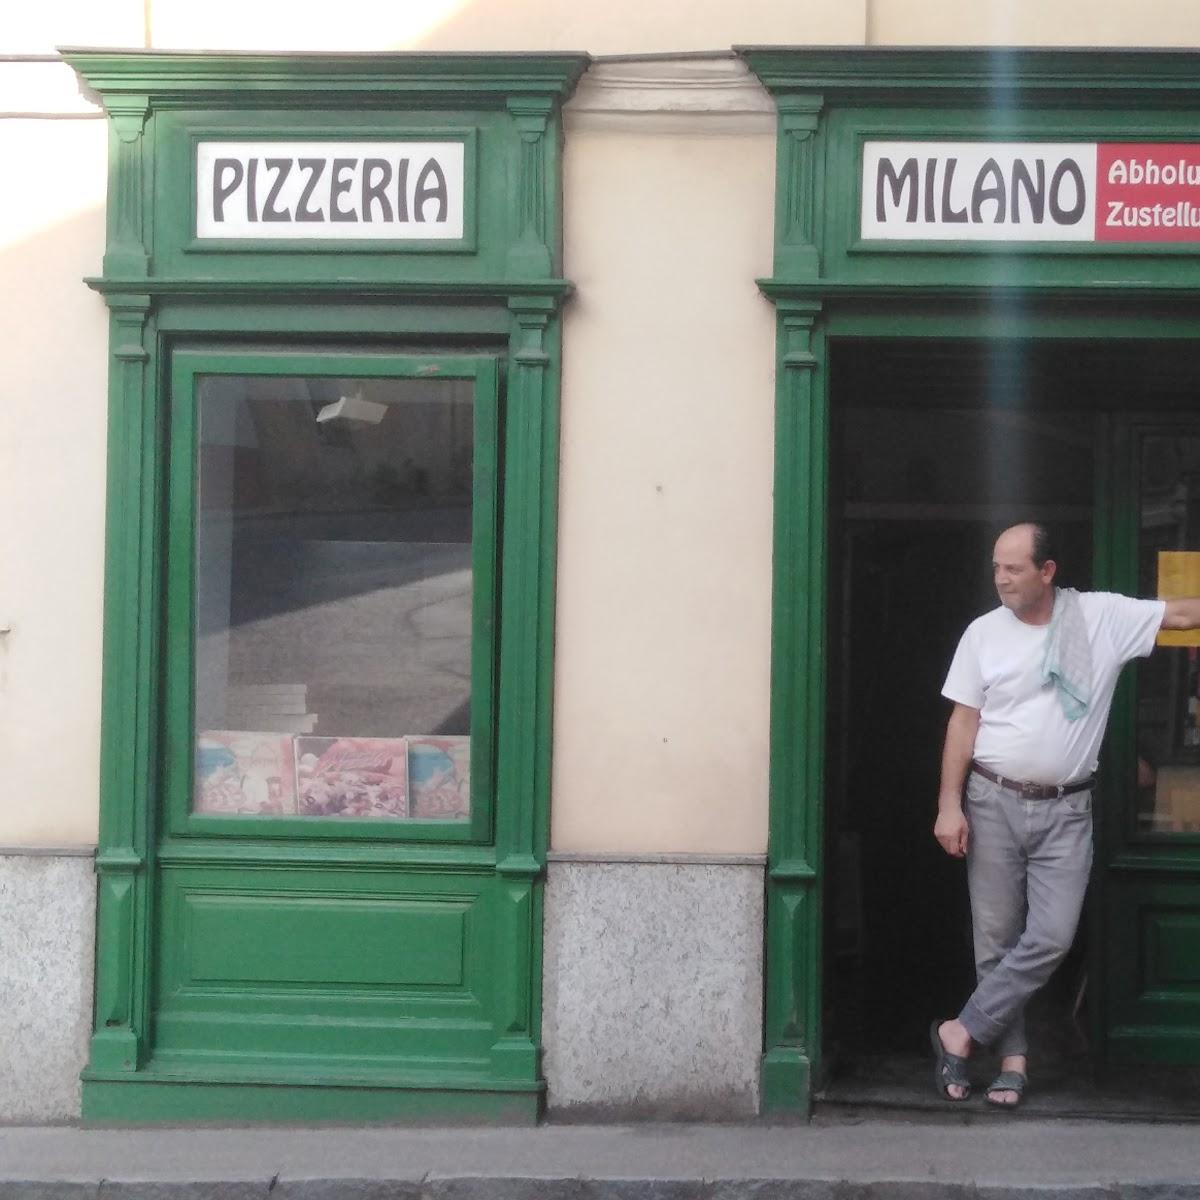 Restaurant "Pizzeria Milano" in Langenlois